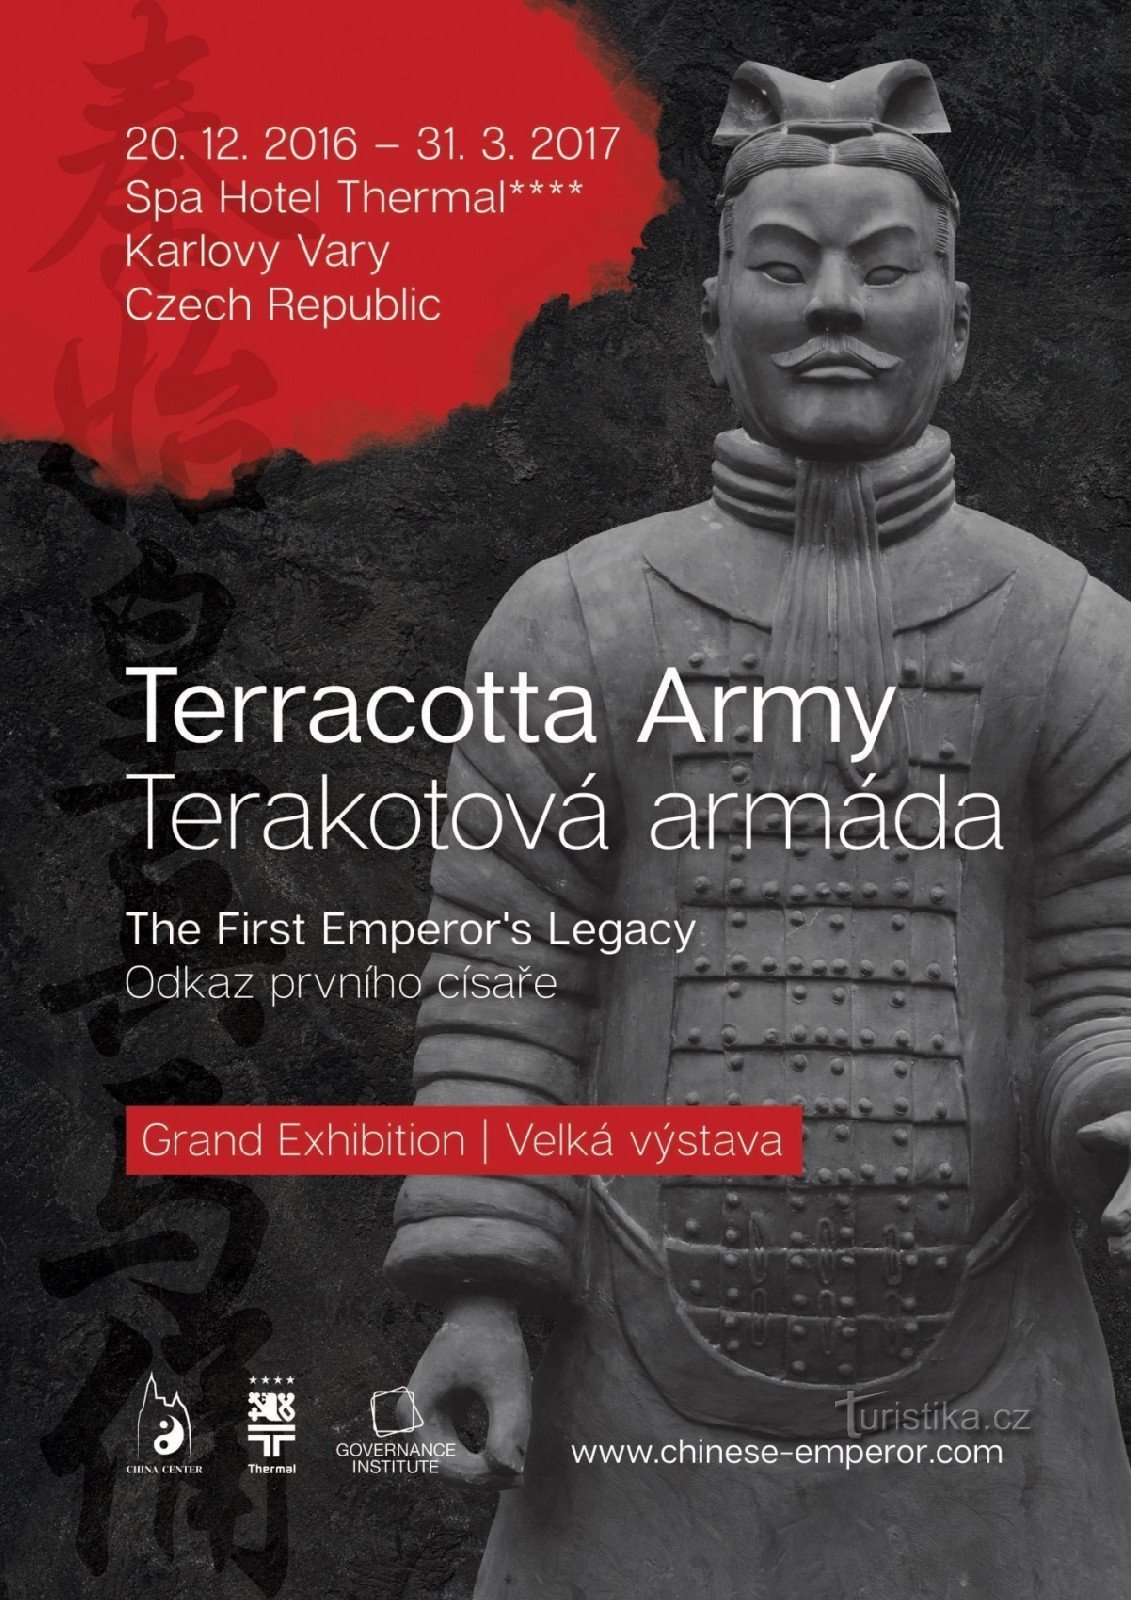 Terracotta Army в Spa Hotel Thermal - Карлові Вари